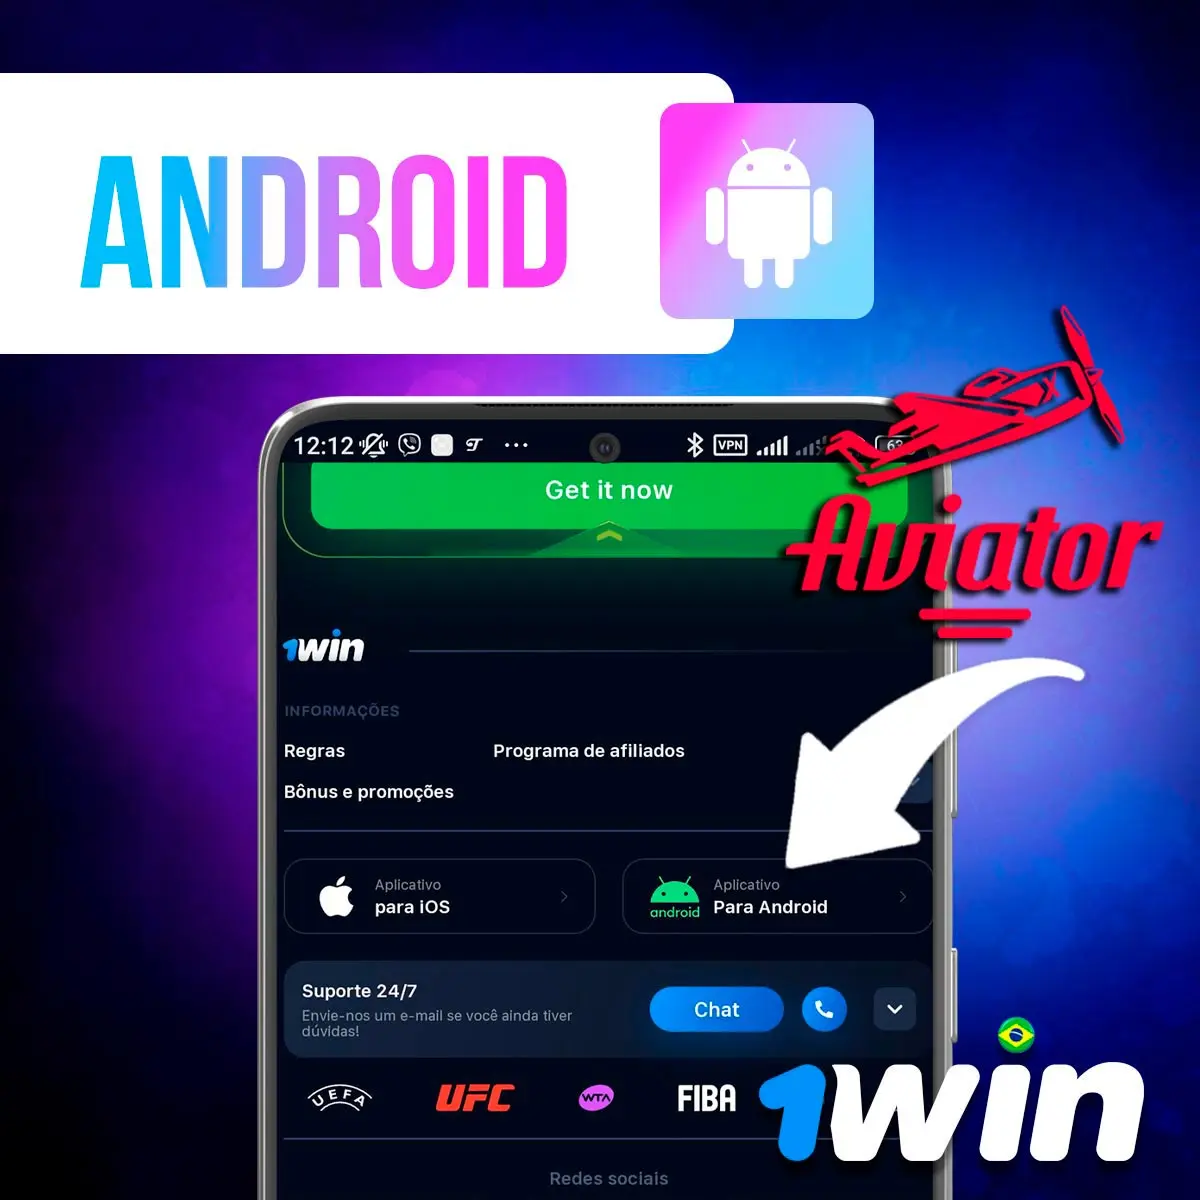 Aplicativo prático Aviator para Android da casa de apostas 1win no Brasil